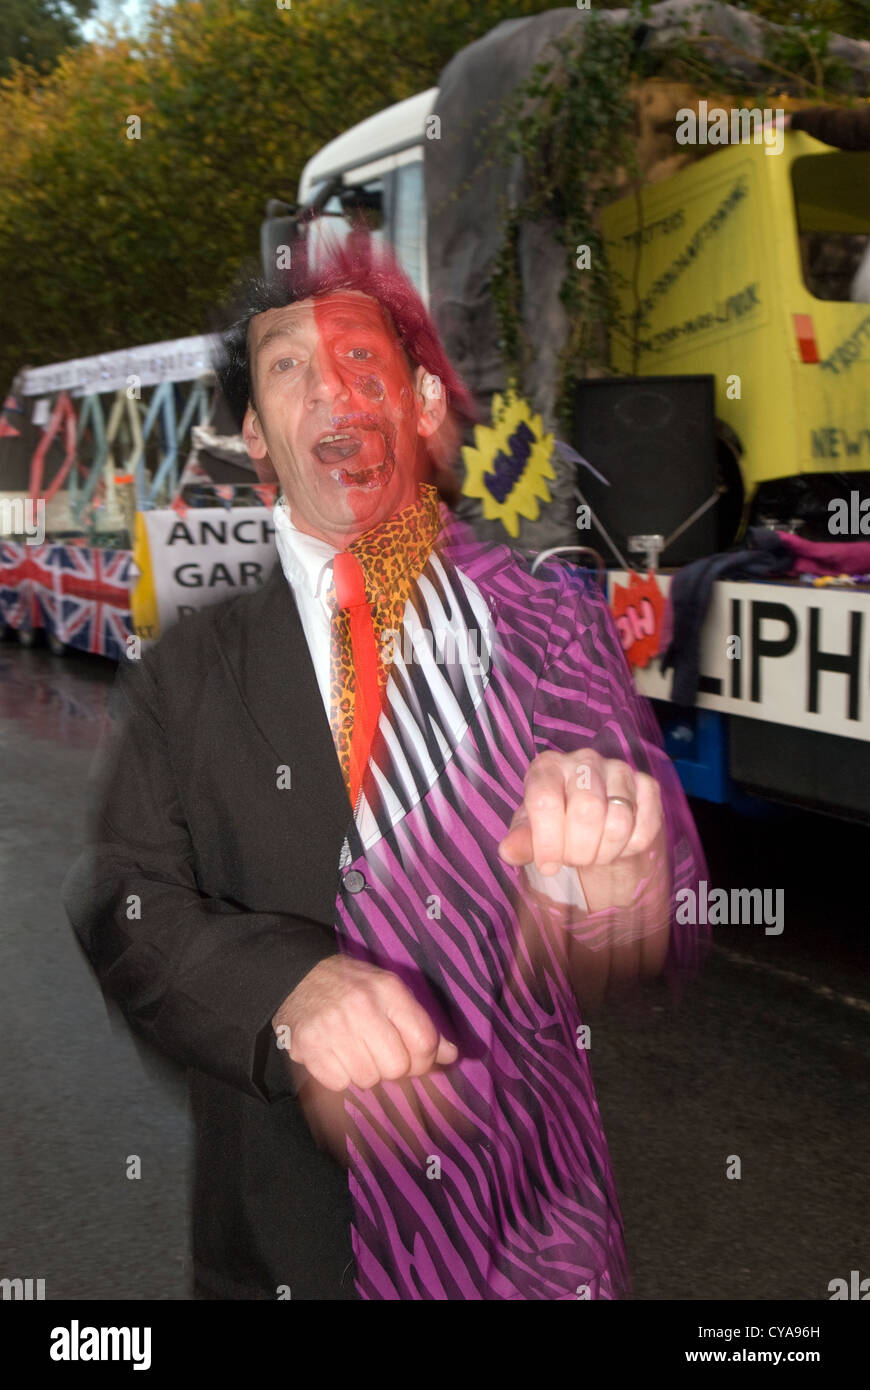 Man in fancy dress having fun at Liphook Carnival,Hampshire, UK. 27.10.2012. Stock Photo